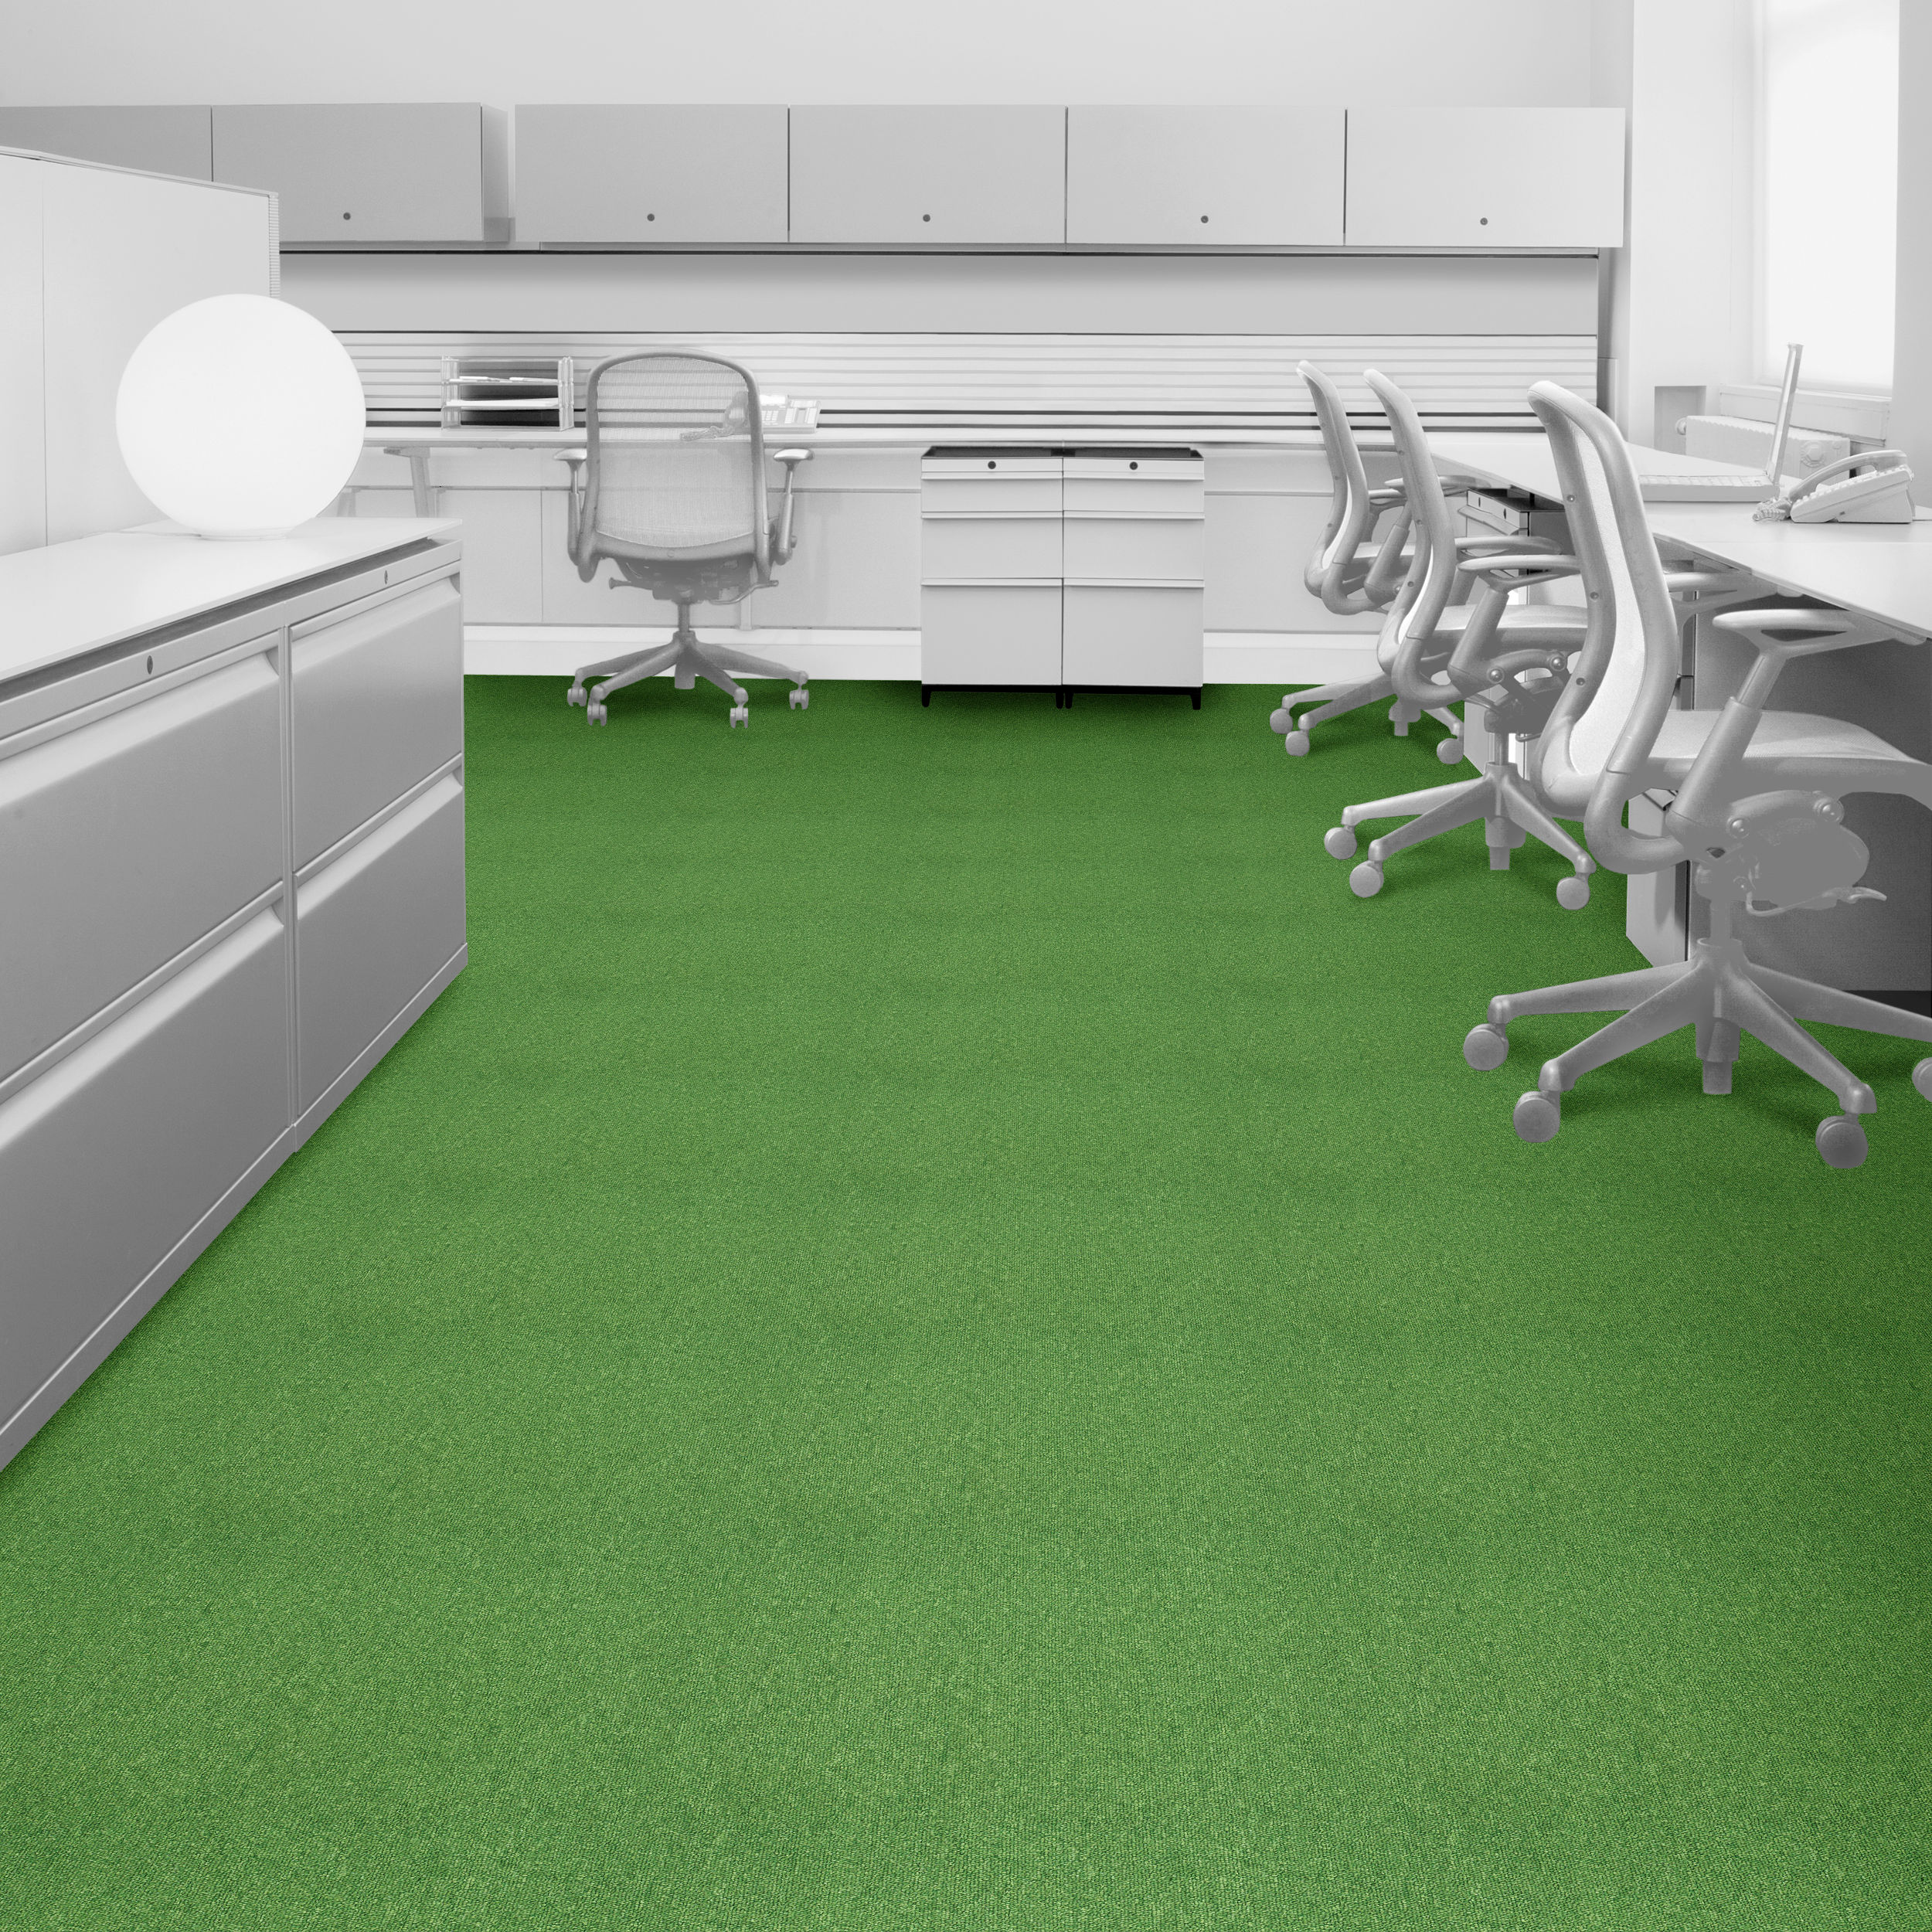 Interface Heuga 580 Carpet Tile - Apple variation in office setting.